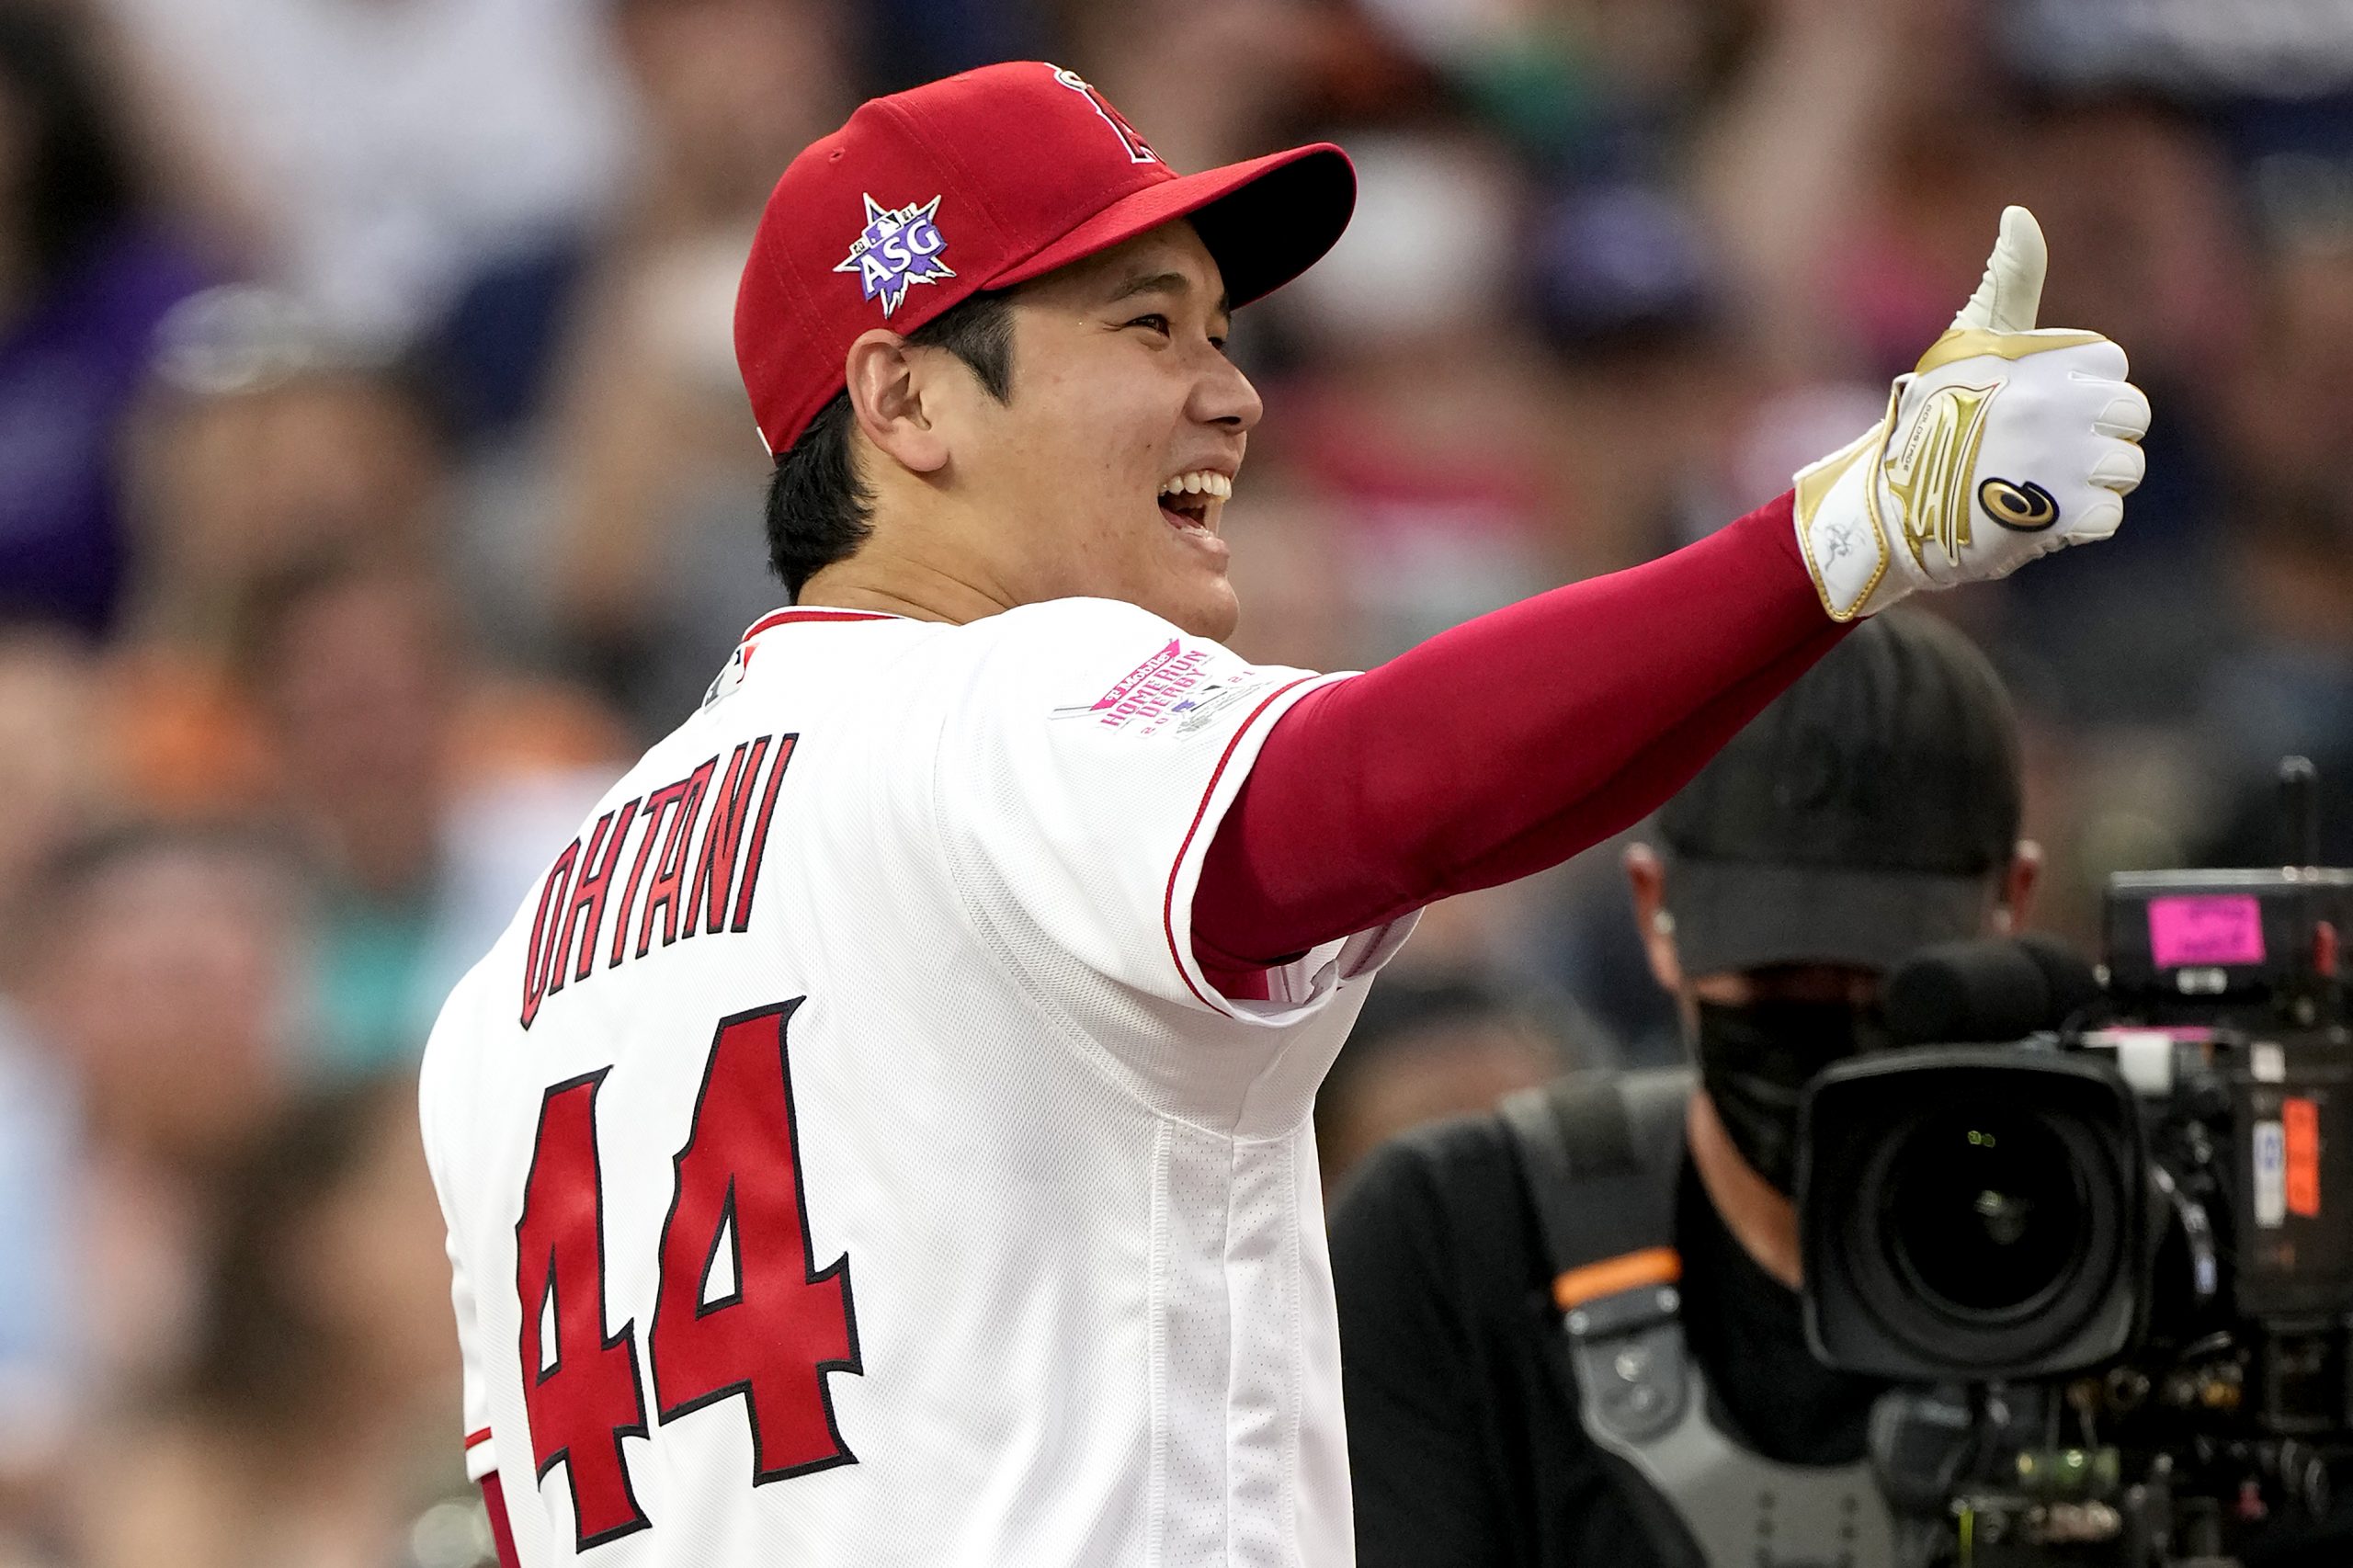 Shohei Ohtani named an AL All-Star as pitcher